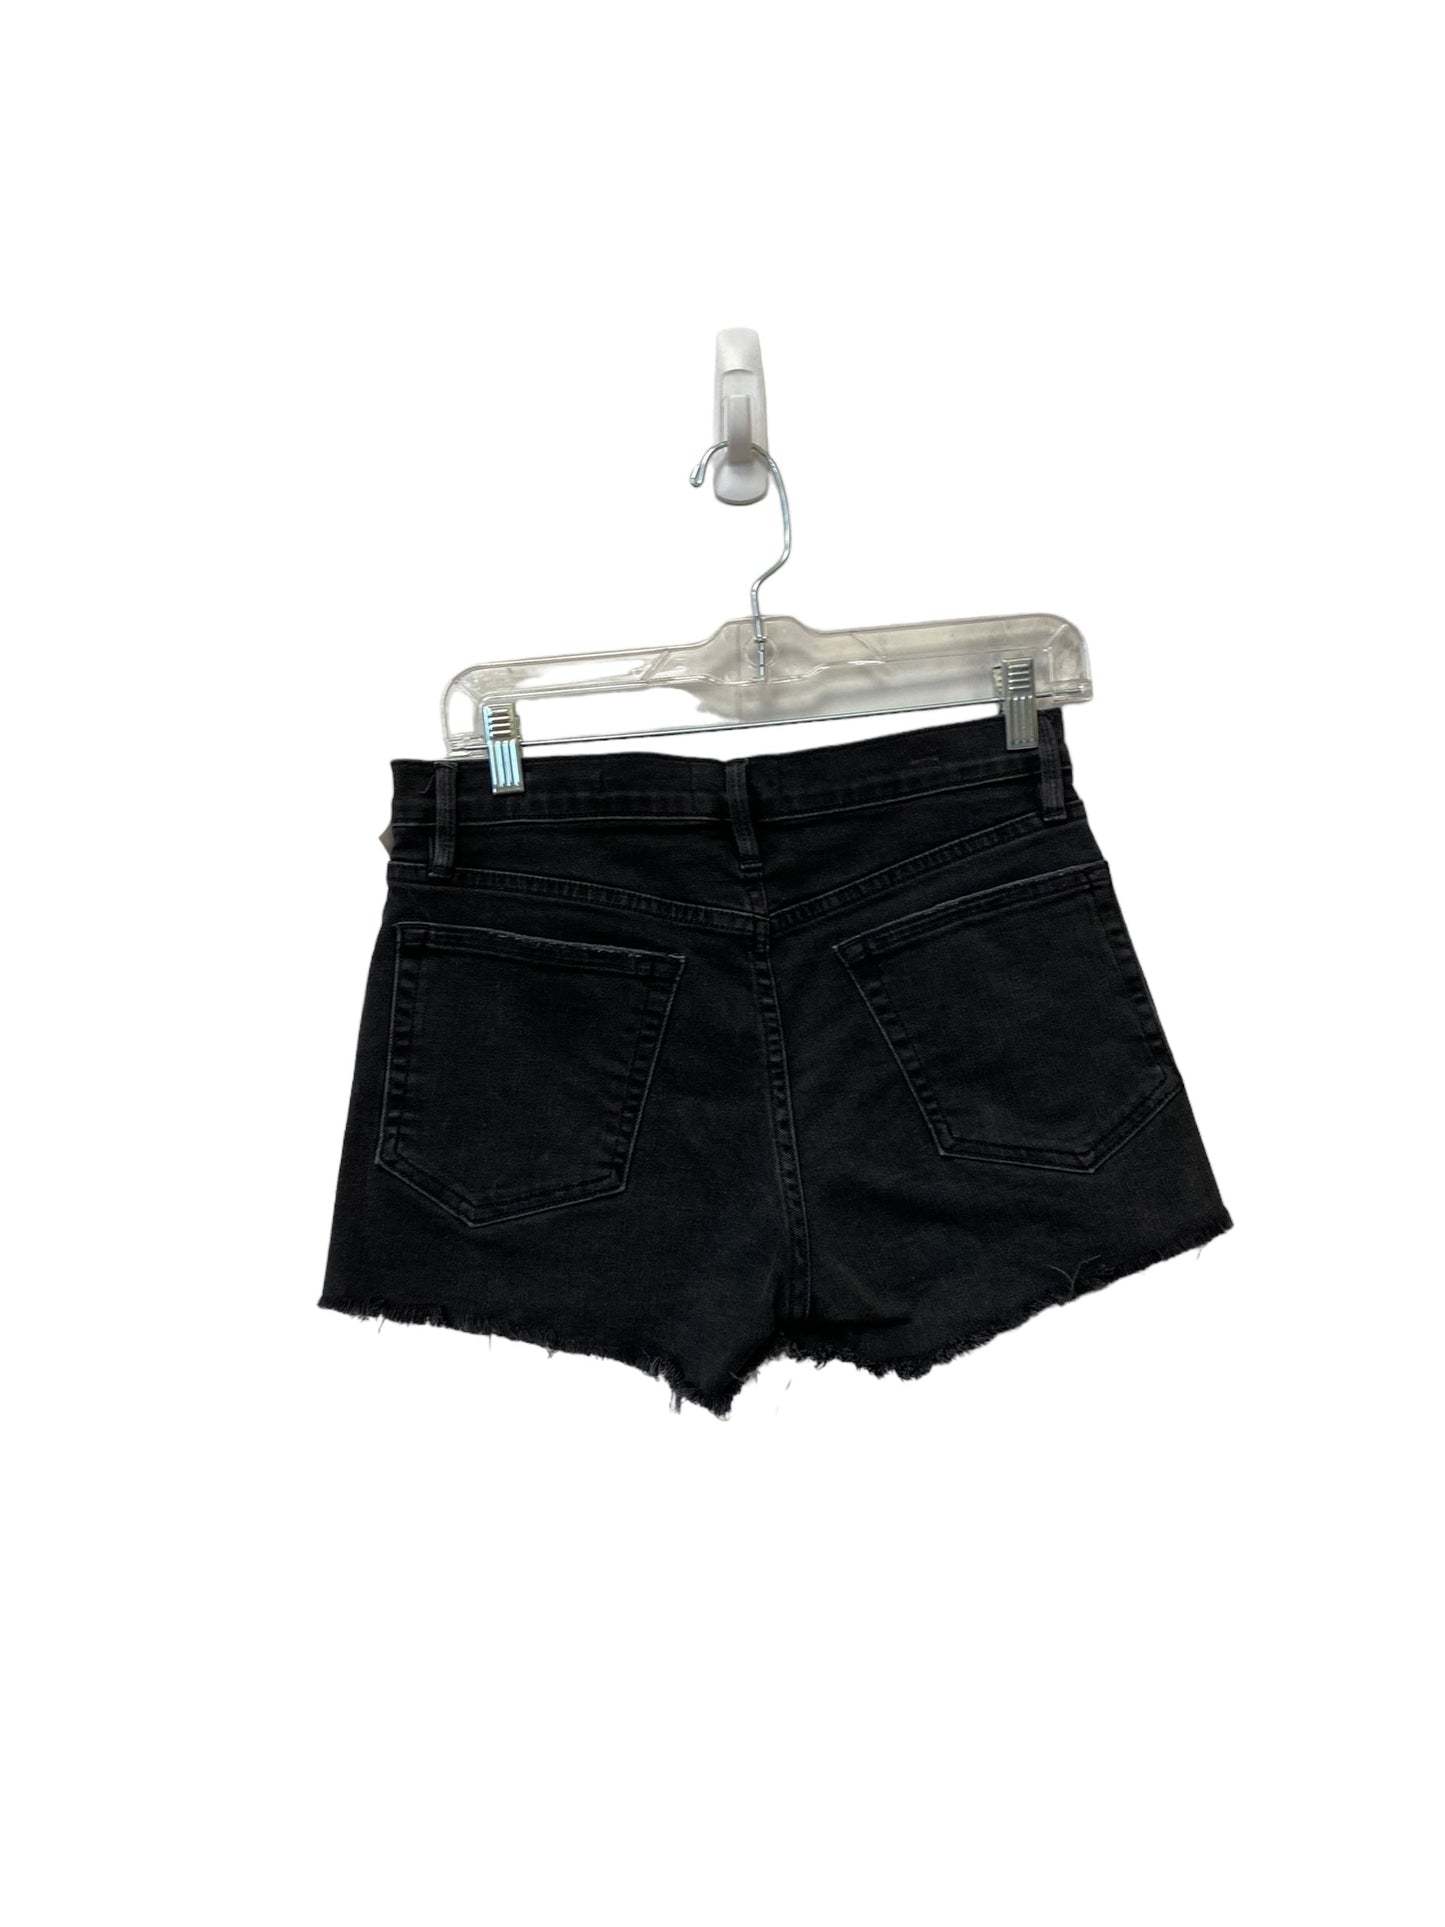 Black Shorts Frame, Size 26